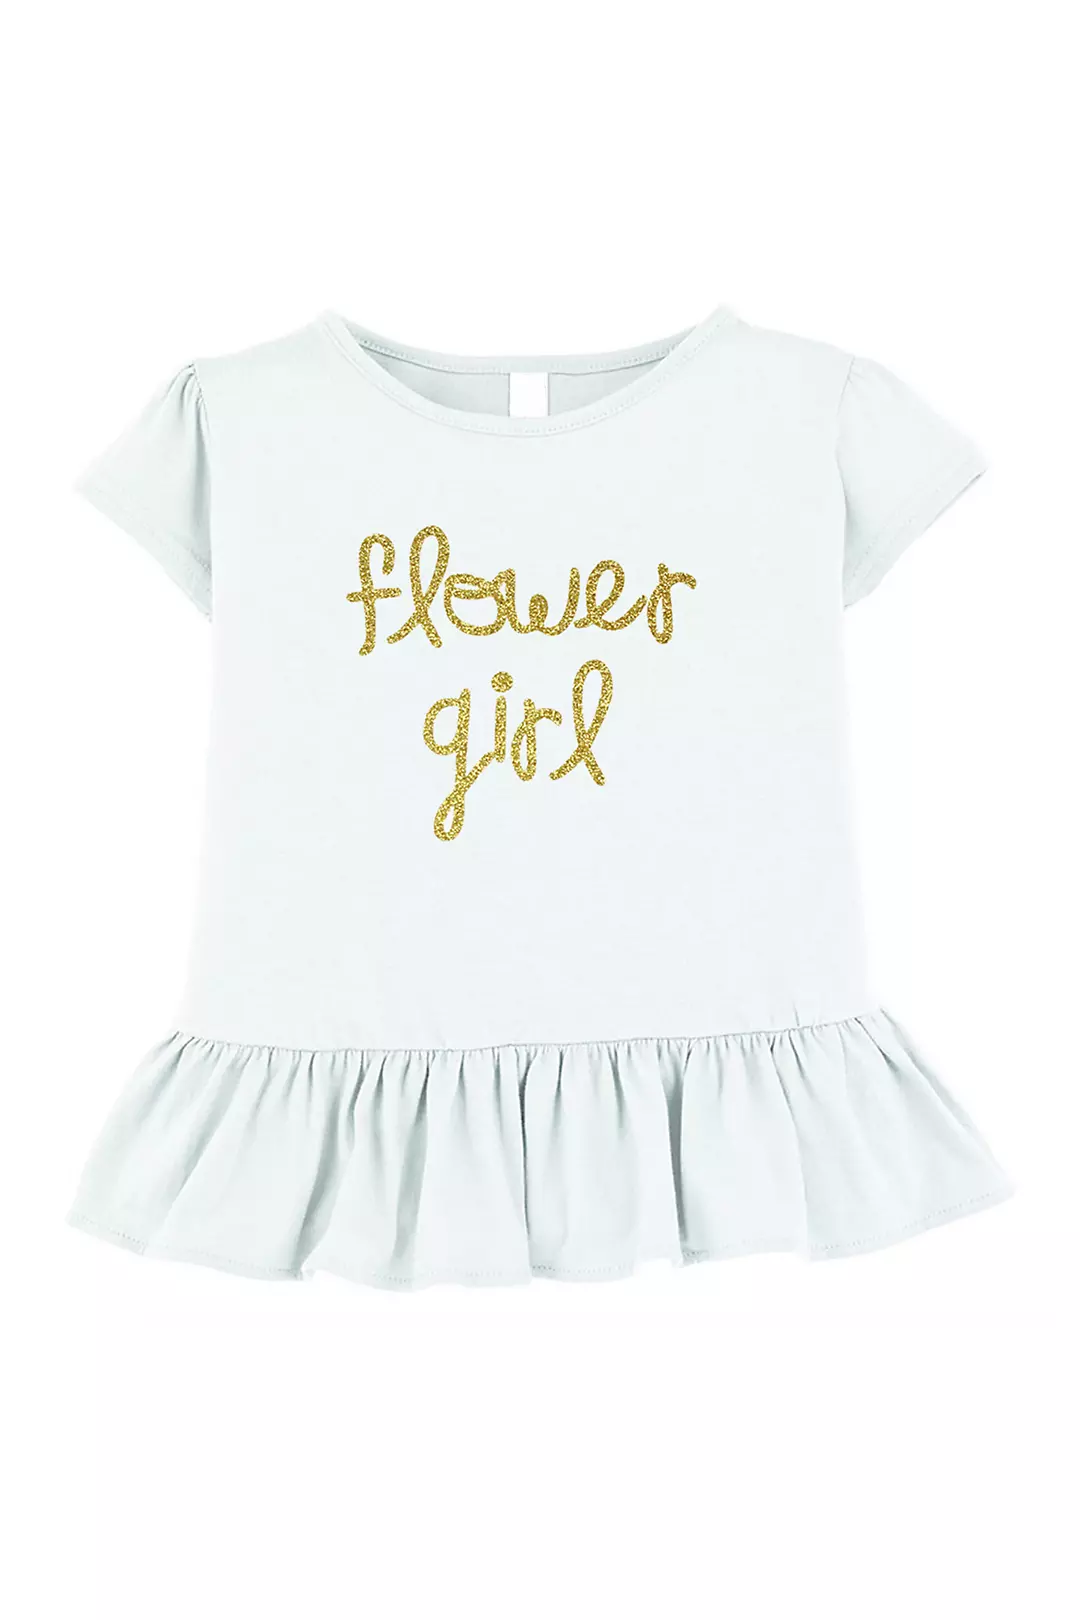 Flower Girl Ruffle Shirt Image